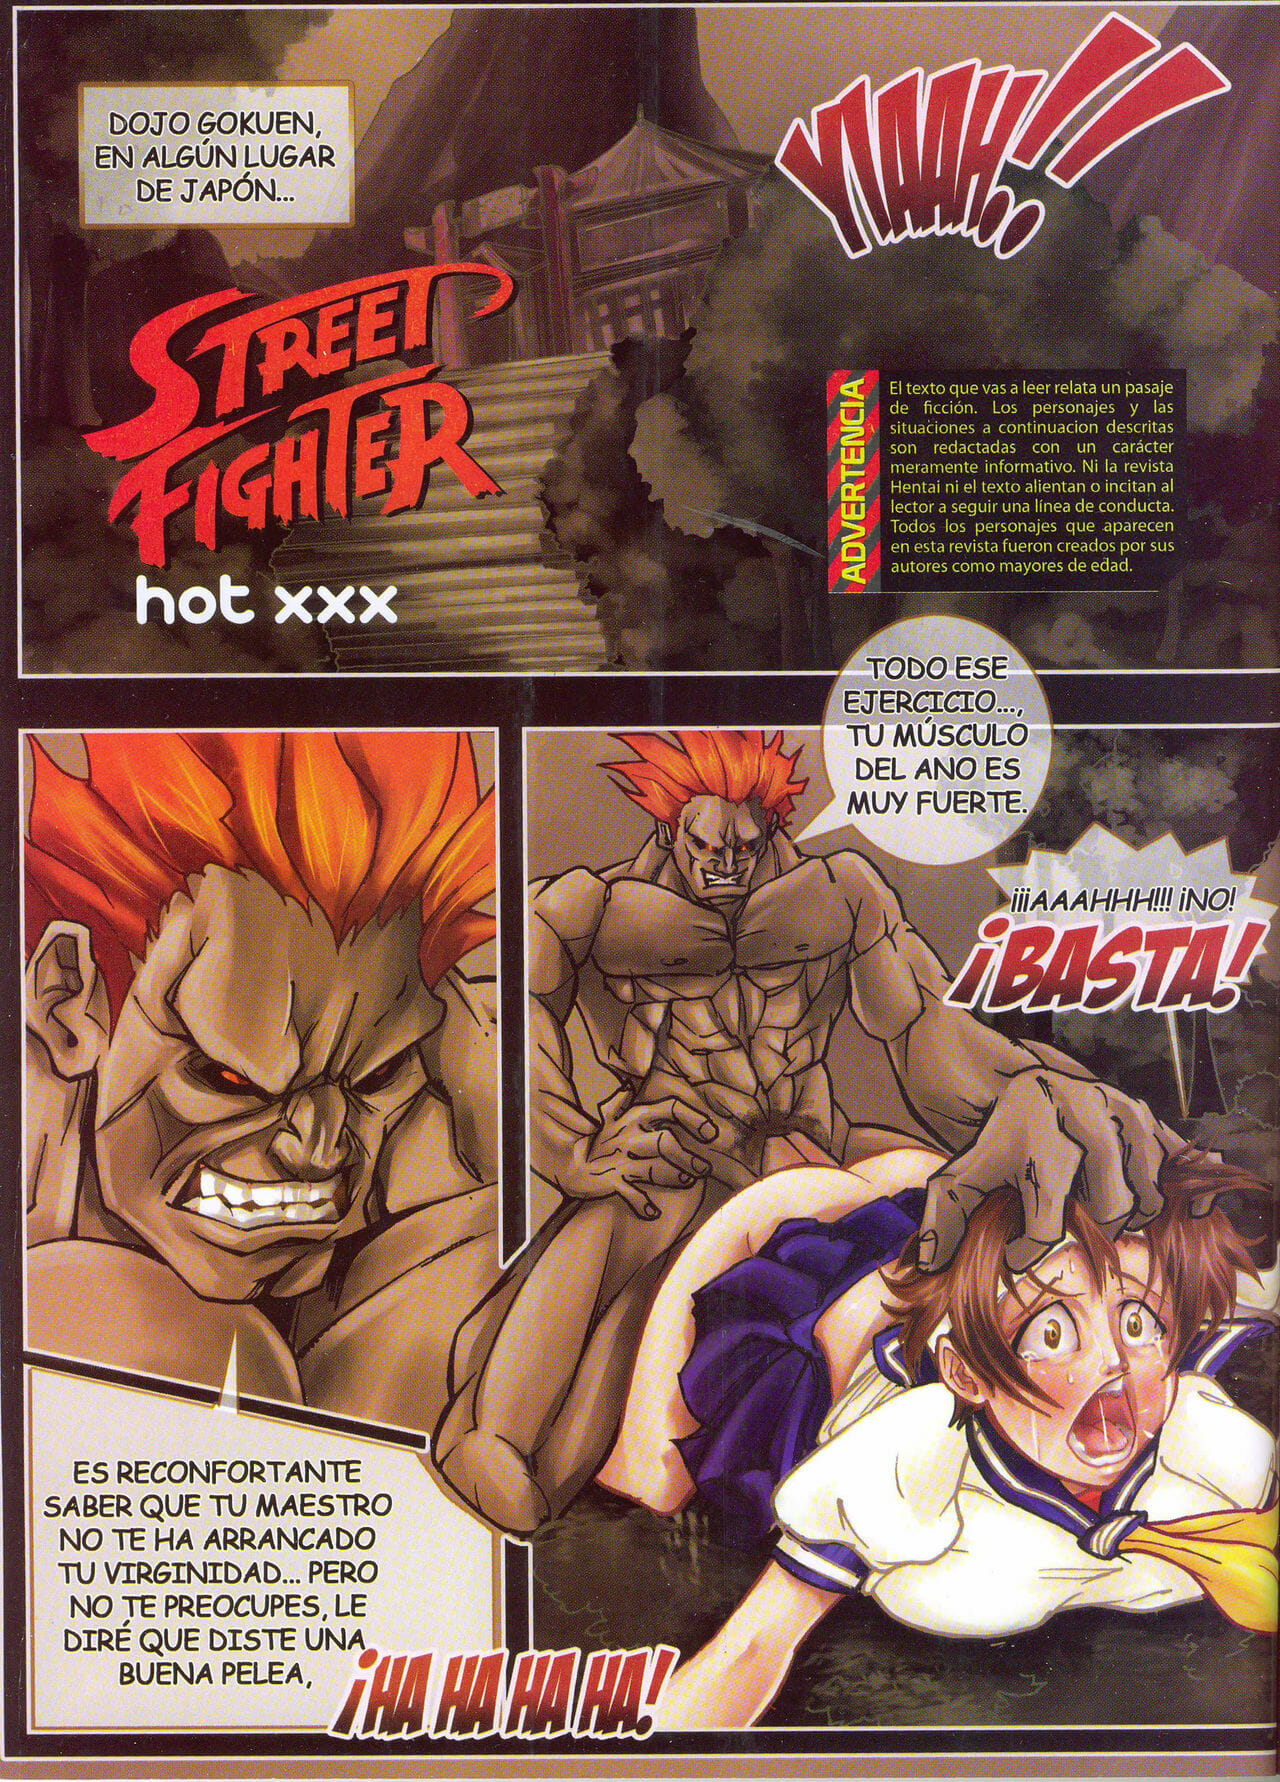 Street fighter sakura porn comic